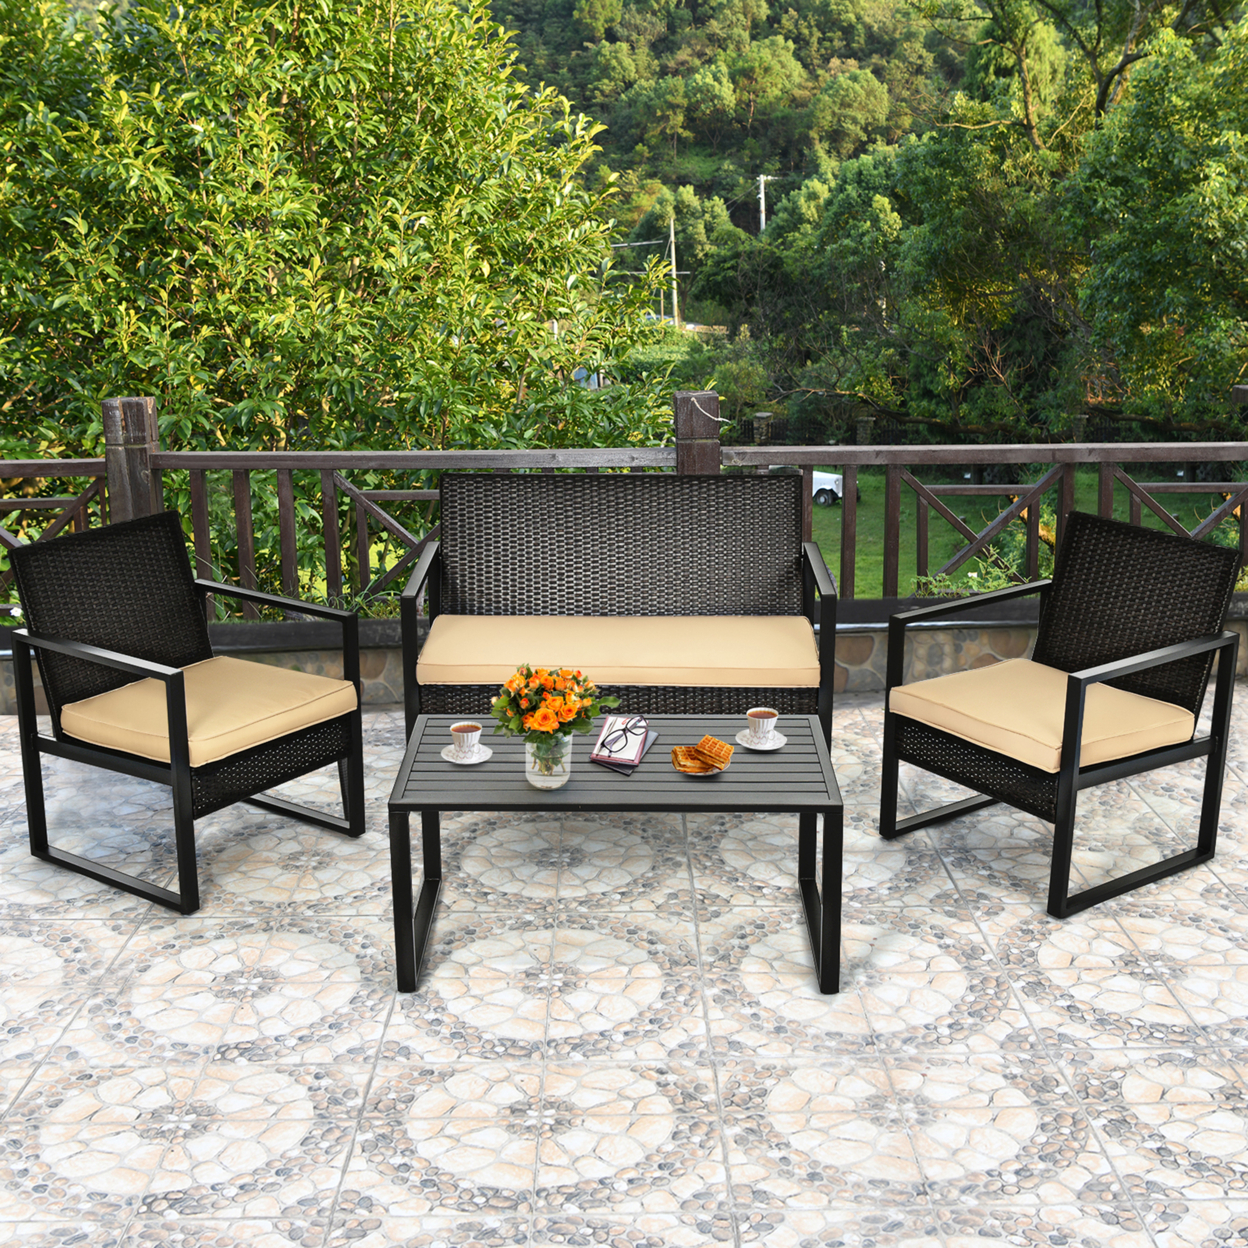 4PCS Outdoor Wicker Rattan Furniture Set Patio Conversation Set W/ Cushions